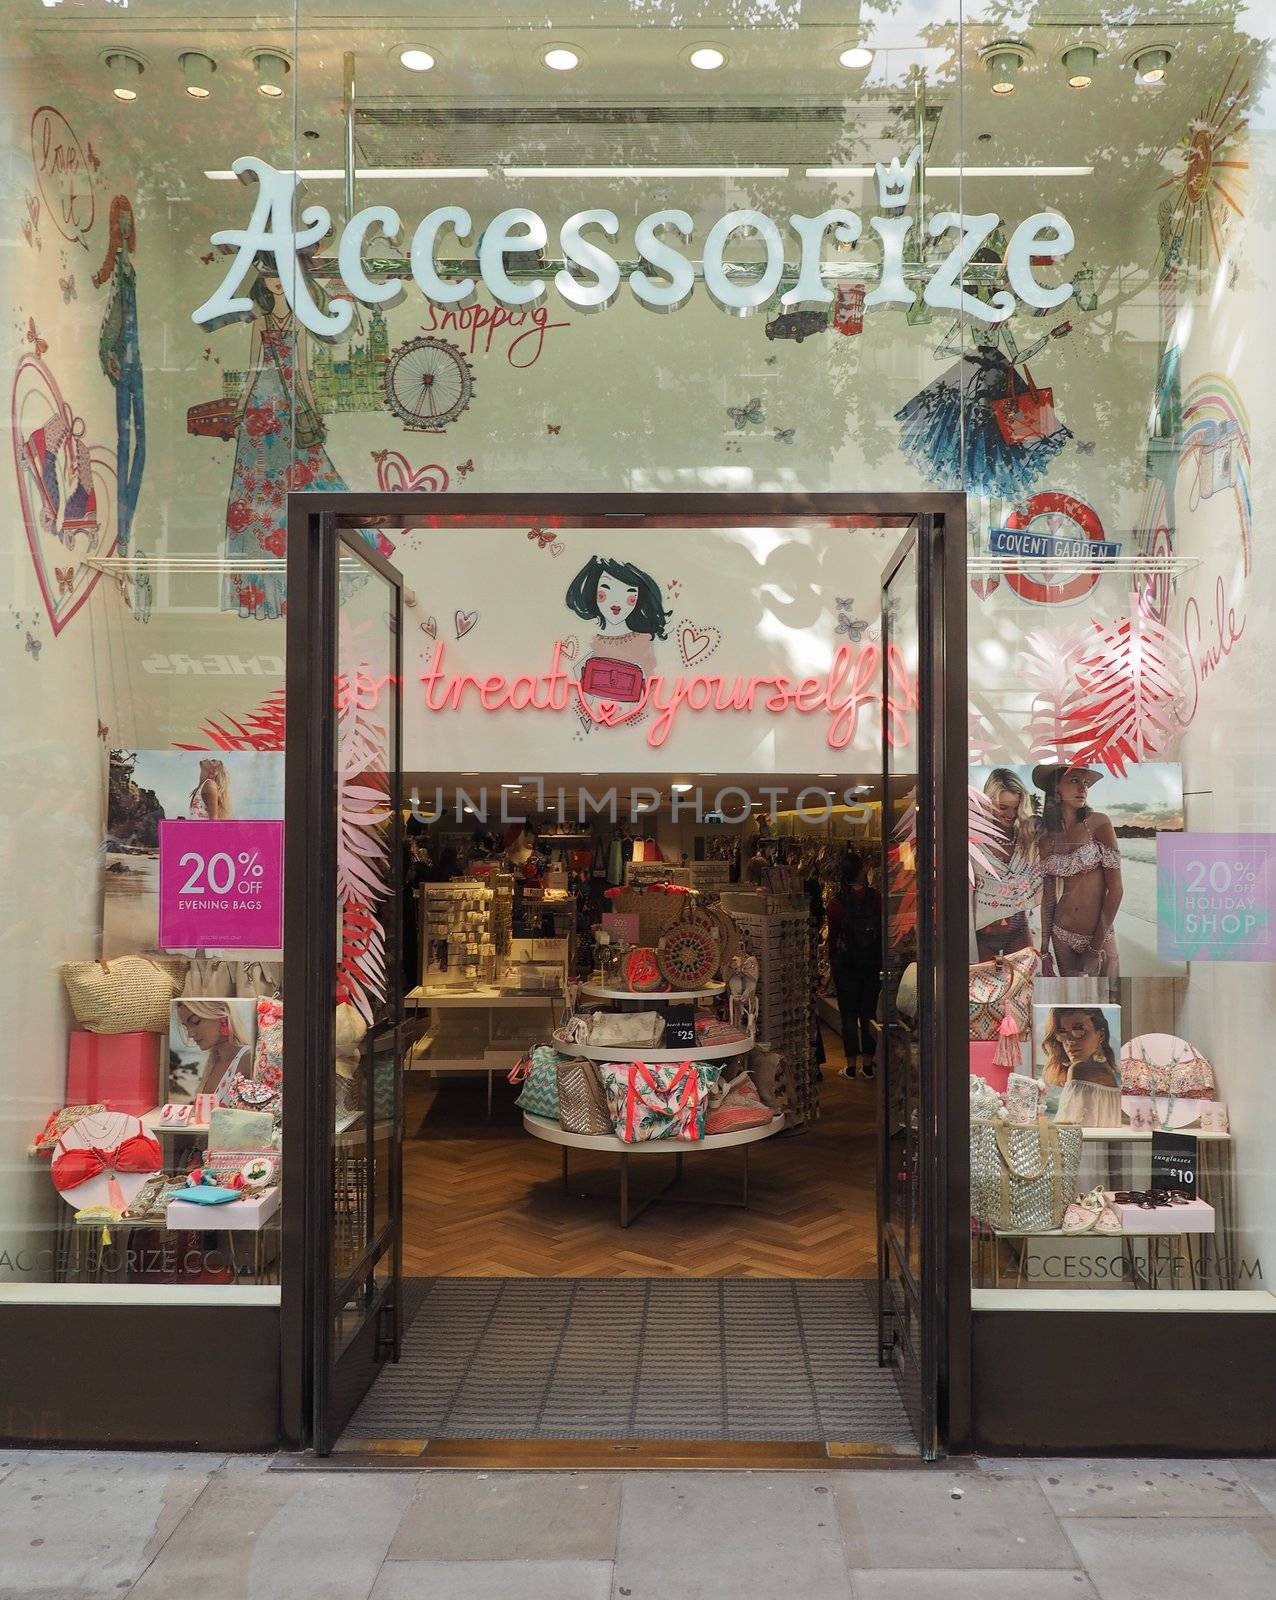 LONDON, UK - CIRCA JUNE 2018: Accessorize storefront